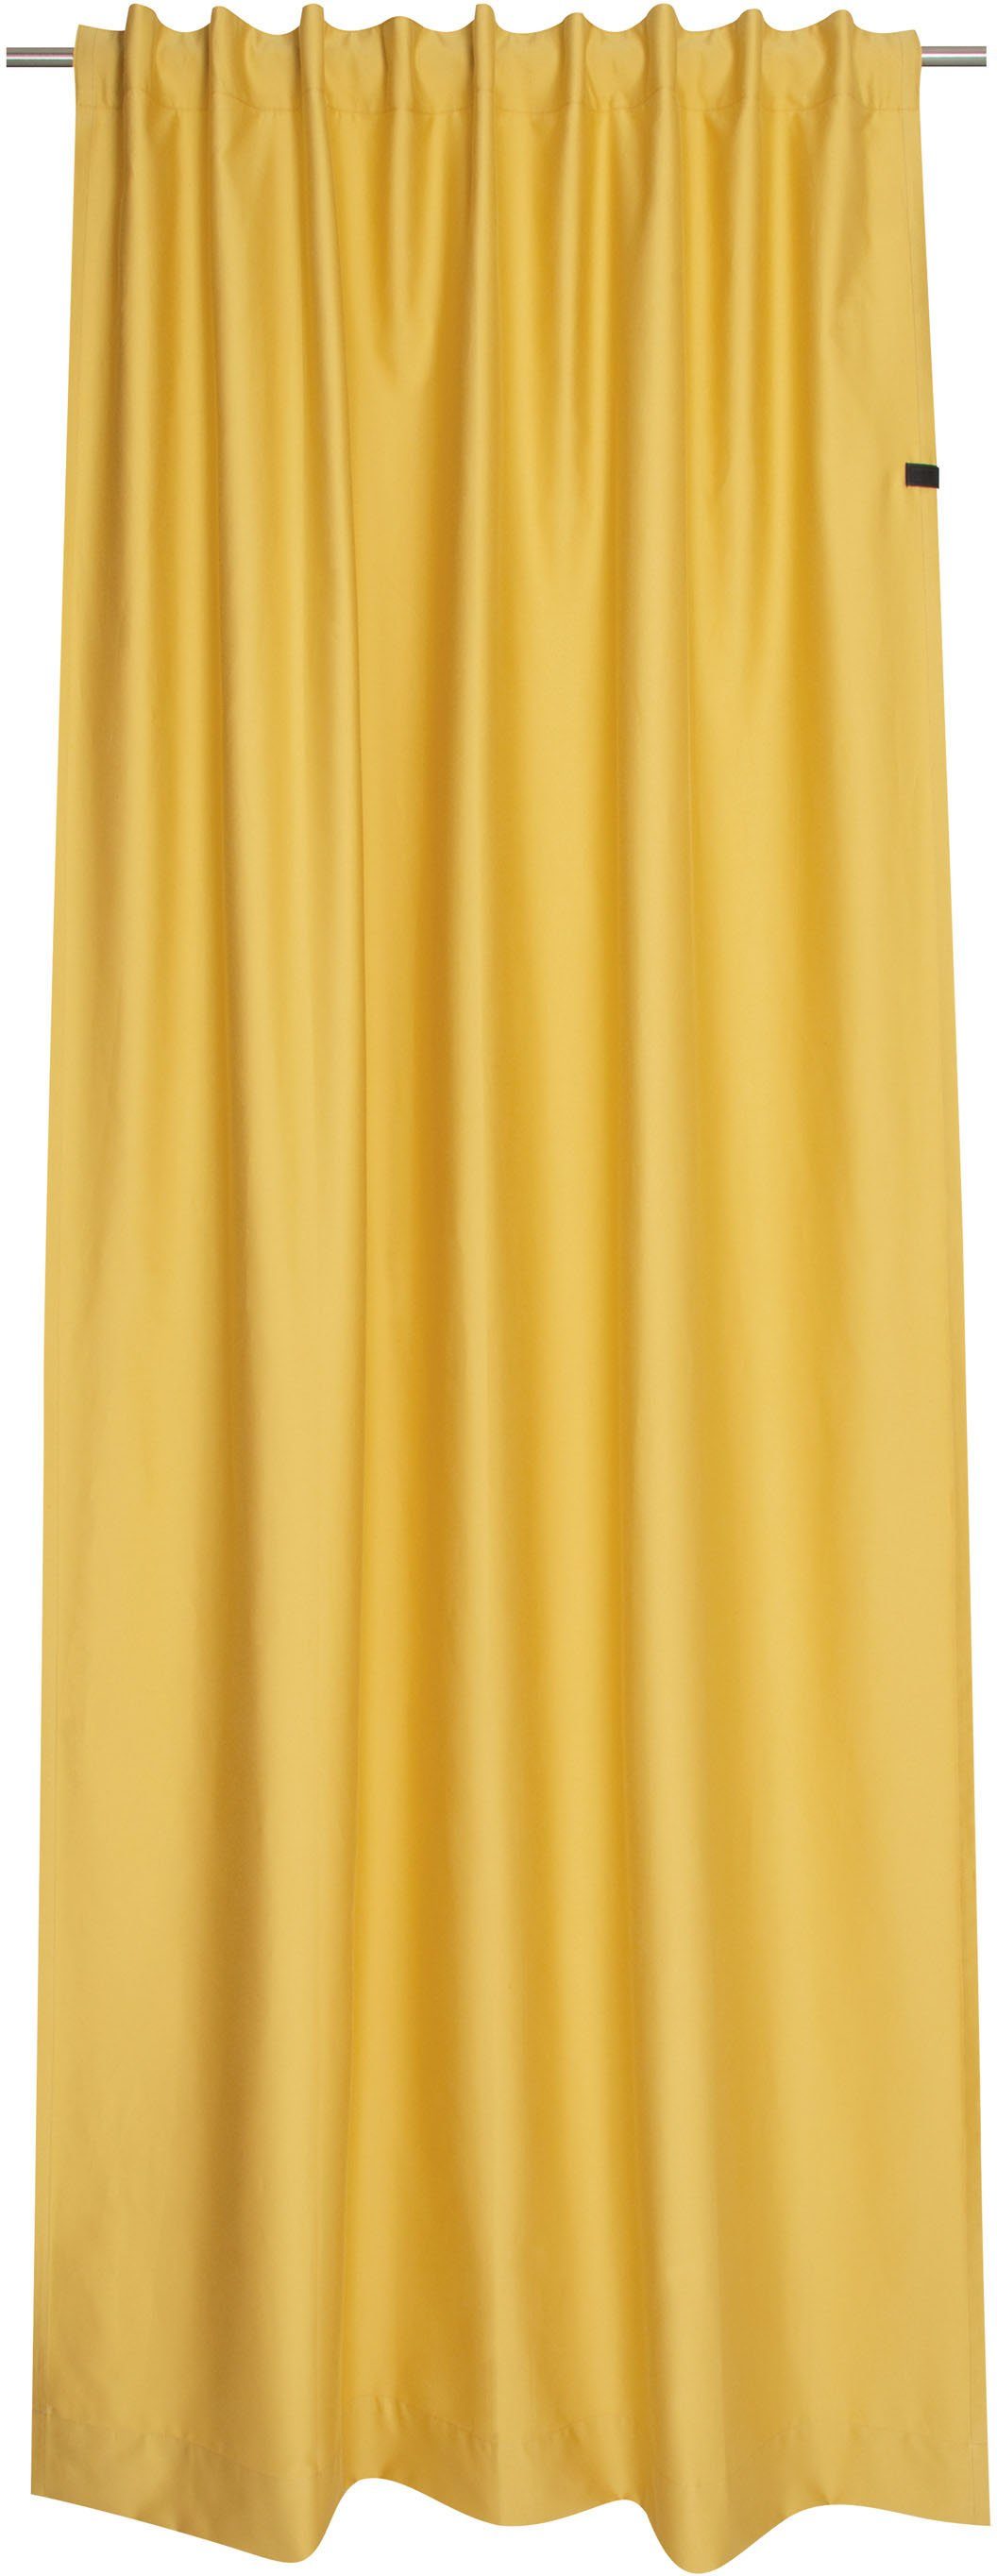 Vorhang Soft, SCHÖNER blickdicht, (1 Jacquard, Lederapplikation goldfarben WOHNEN-Kollektion, St), mit Multifunktionsband